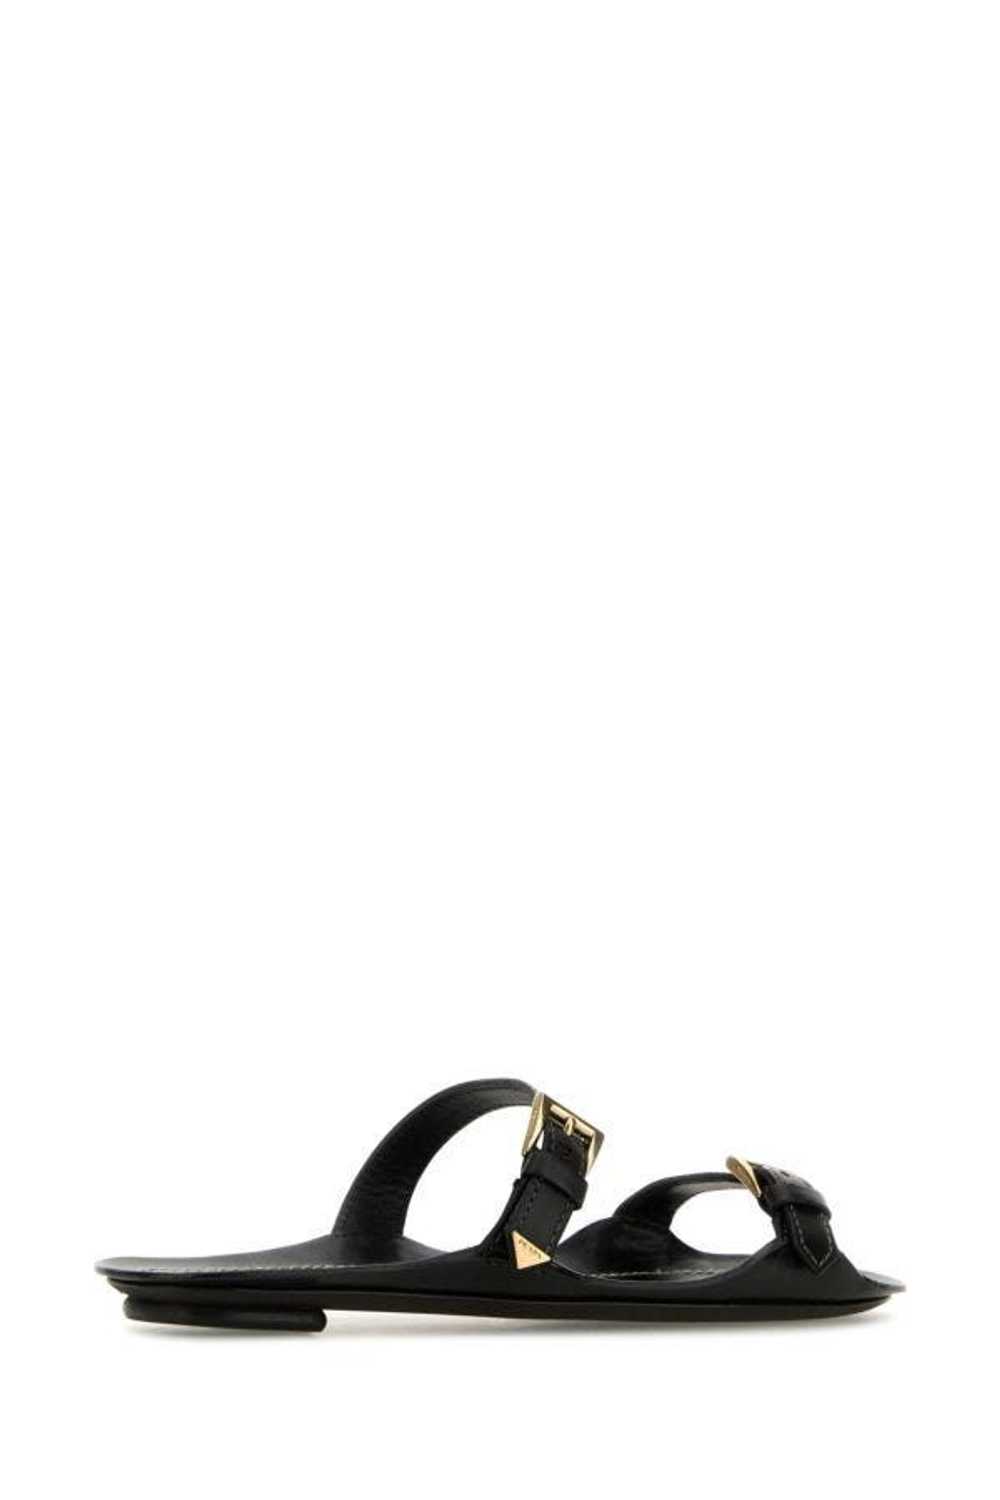 Prada Black Leather Slippers - image 5